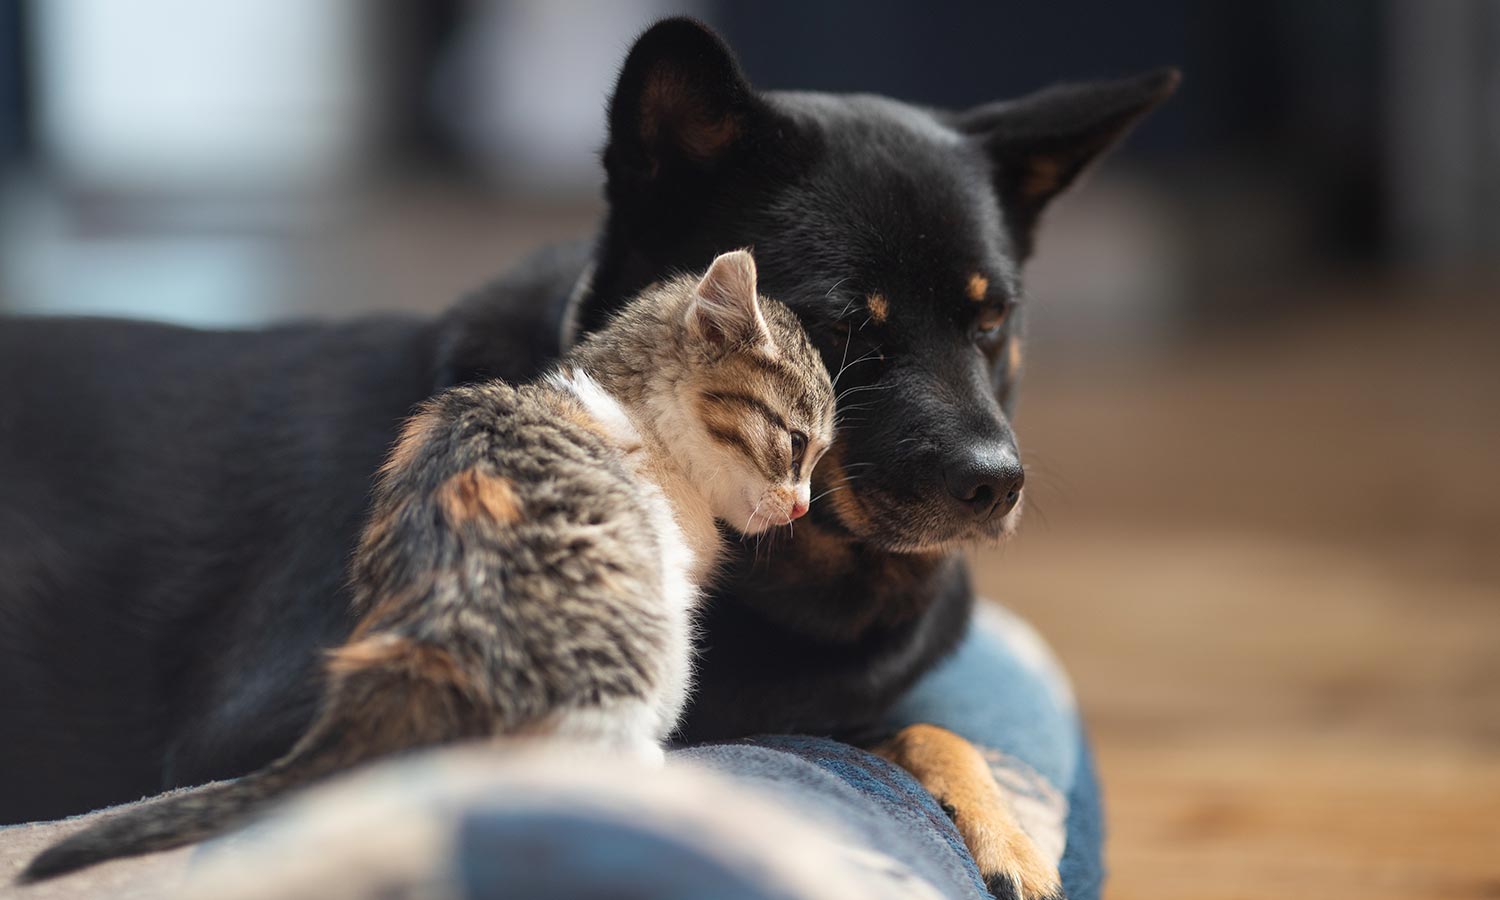 A dog and cat cuddling